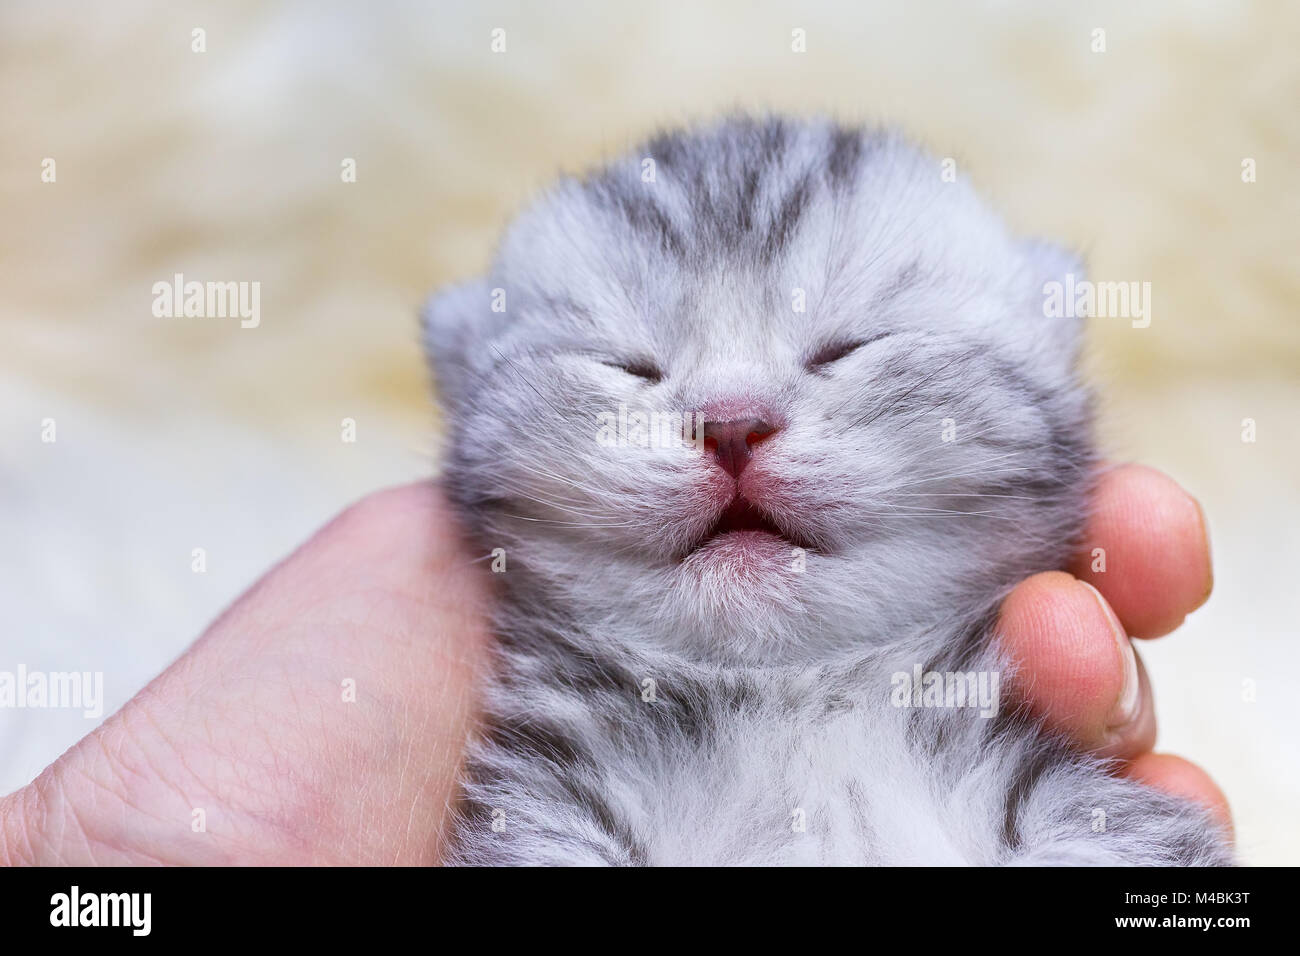 Head newborn silver tabby cat sleeping on hand Stock Photo